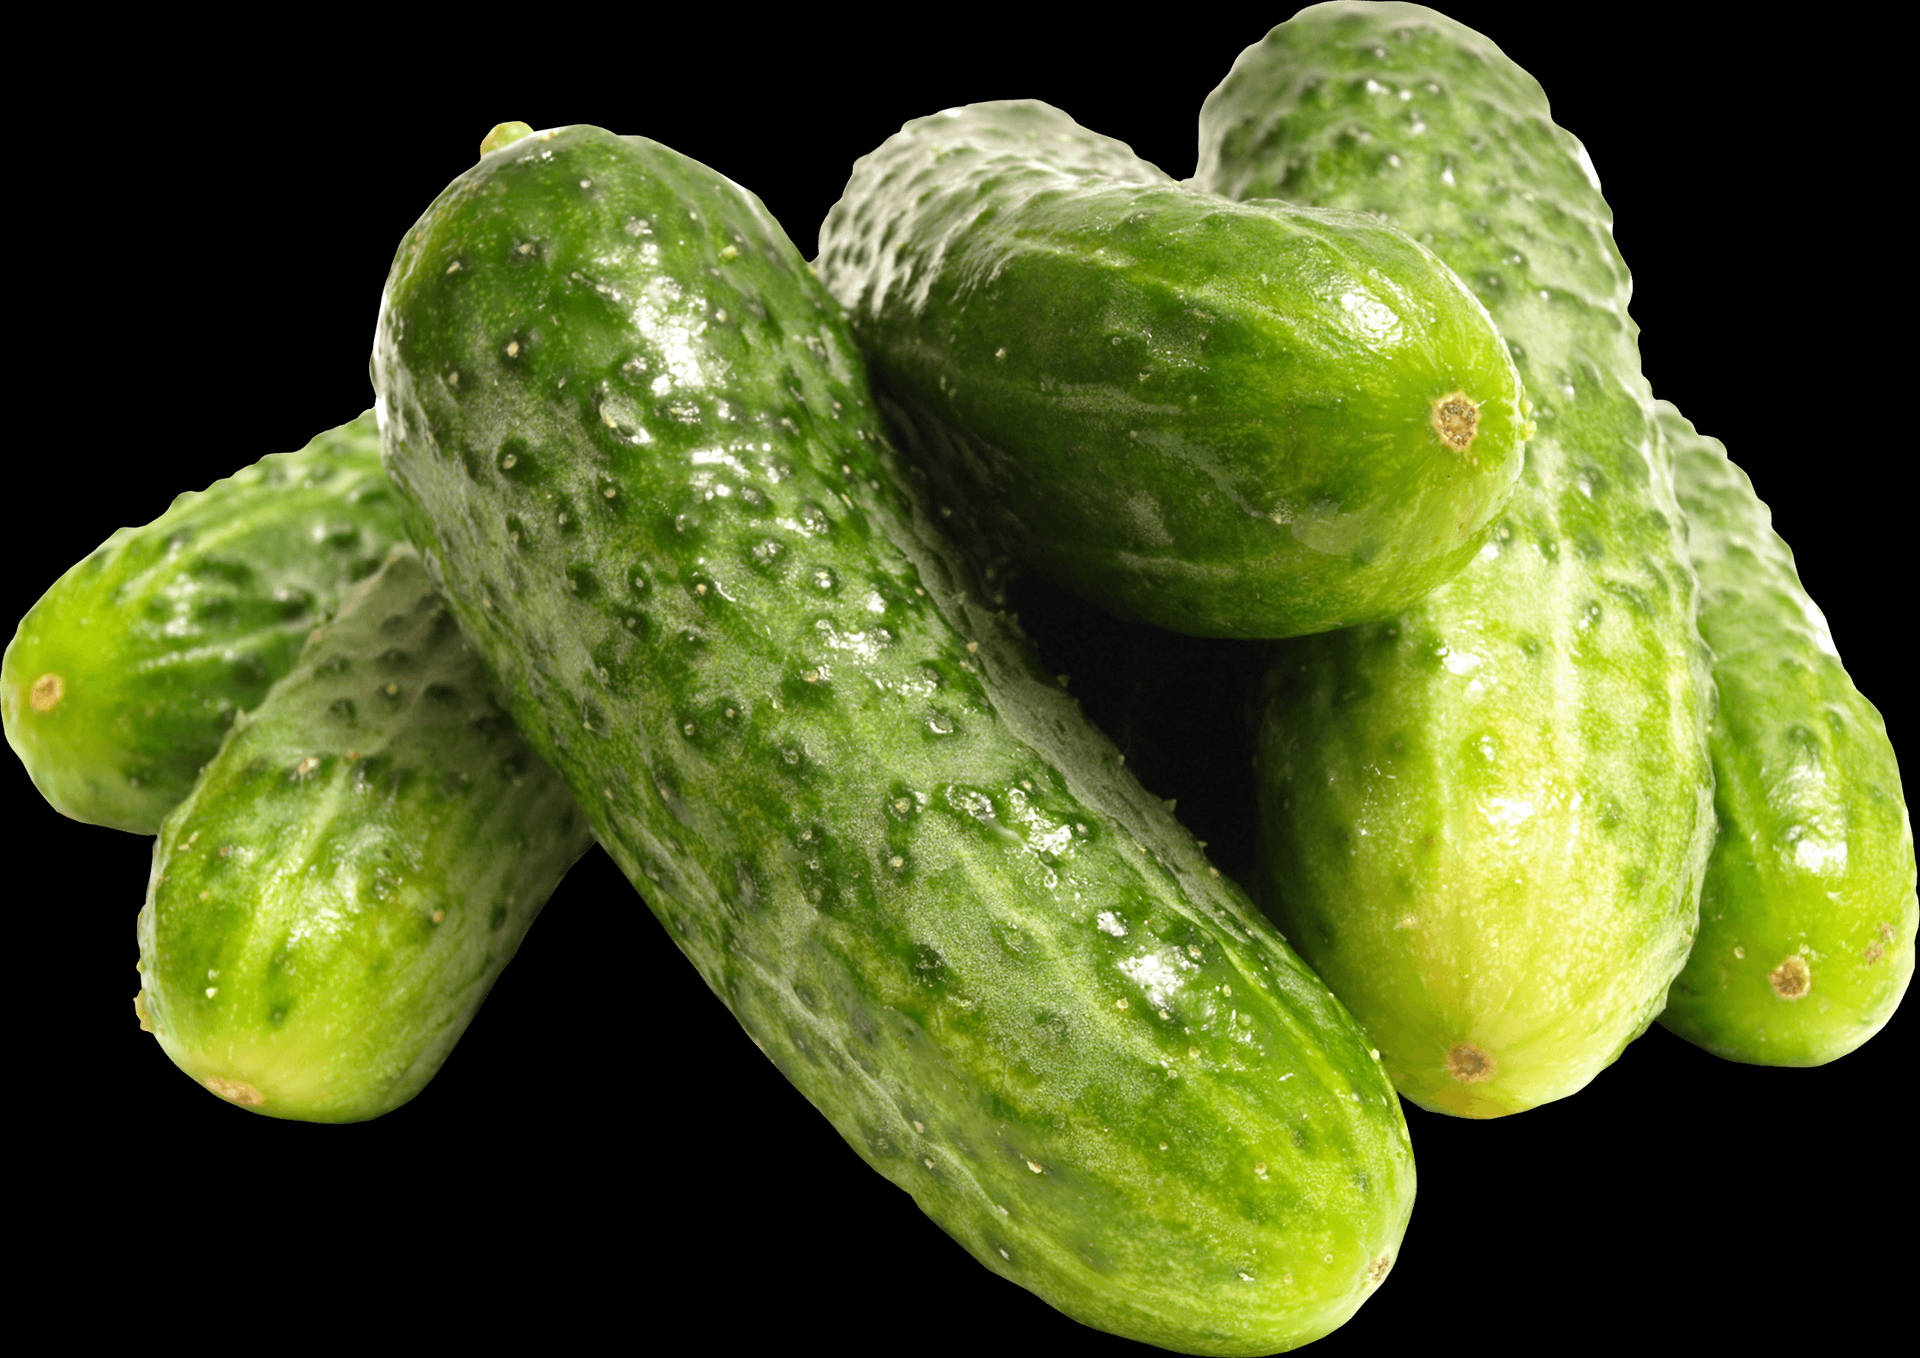 Pickled Bumpy Green Cucumber Fruits Wallpaper